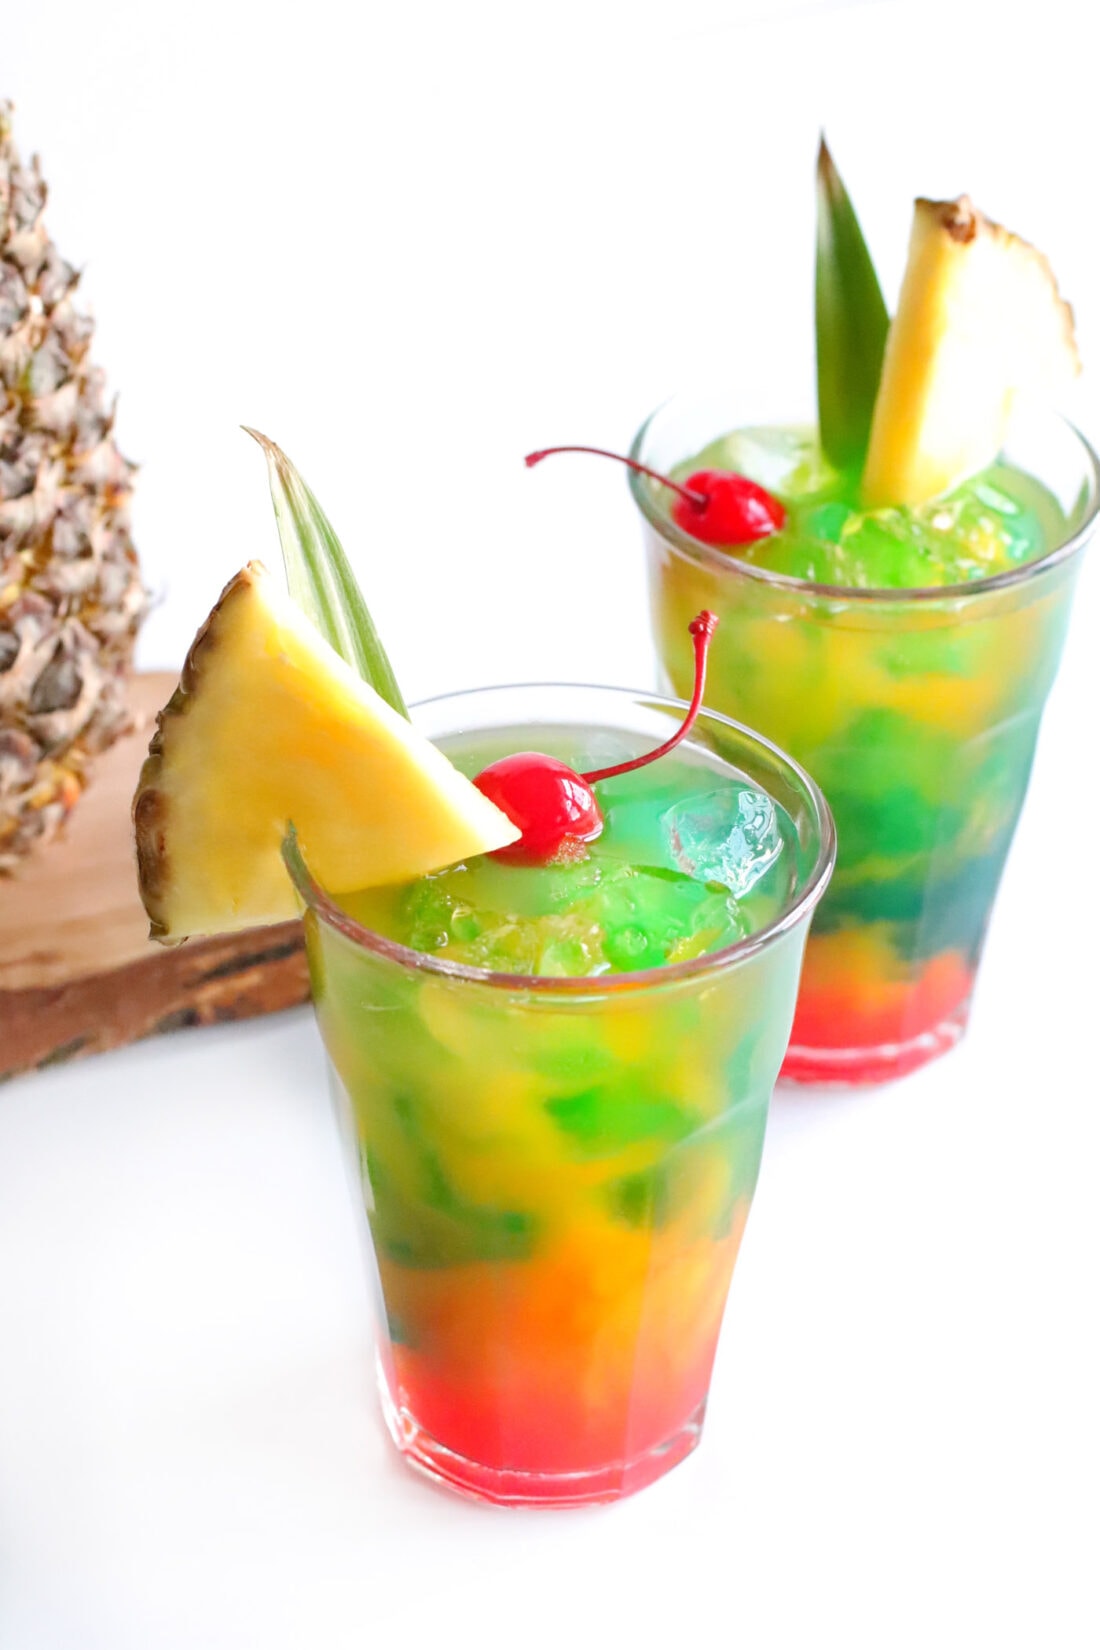 Two Blue Hawaiian Mai Tai drinks garnished with a pineapple wedge and cherry